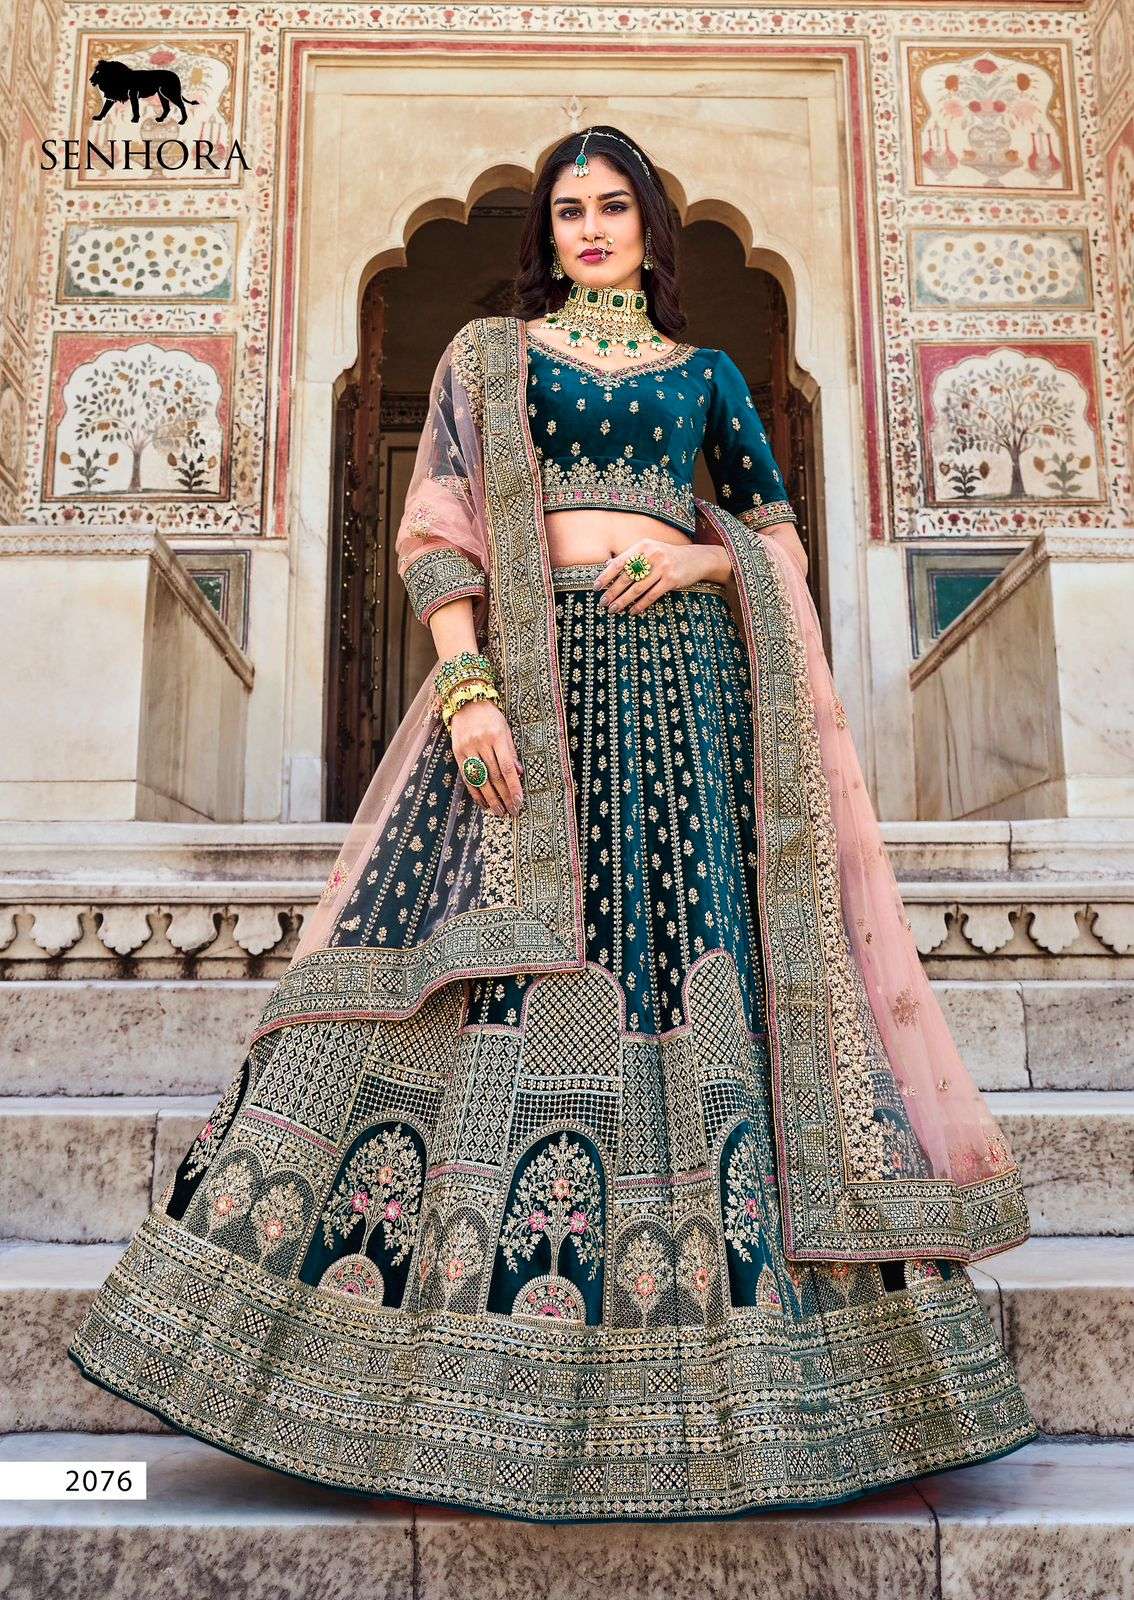 Srija 9000 Velvet Bridal Lehenga Choli at Rs.9500/Piece in surat offer by  Aaradhya Fashion